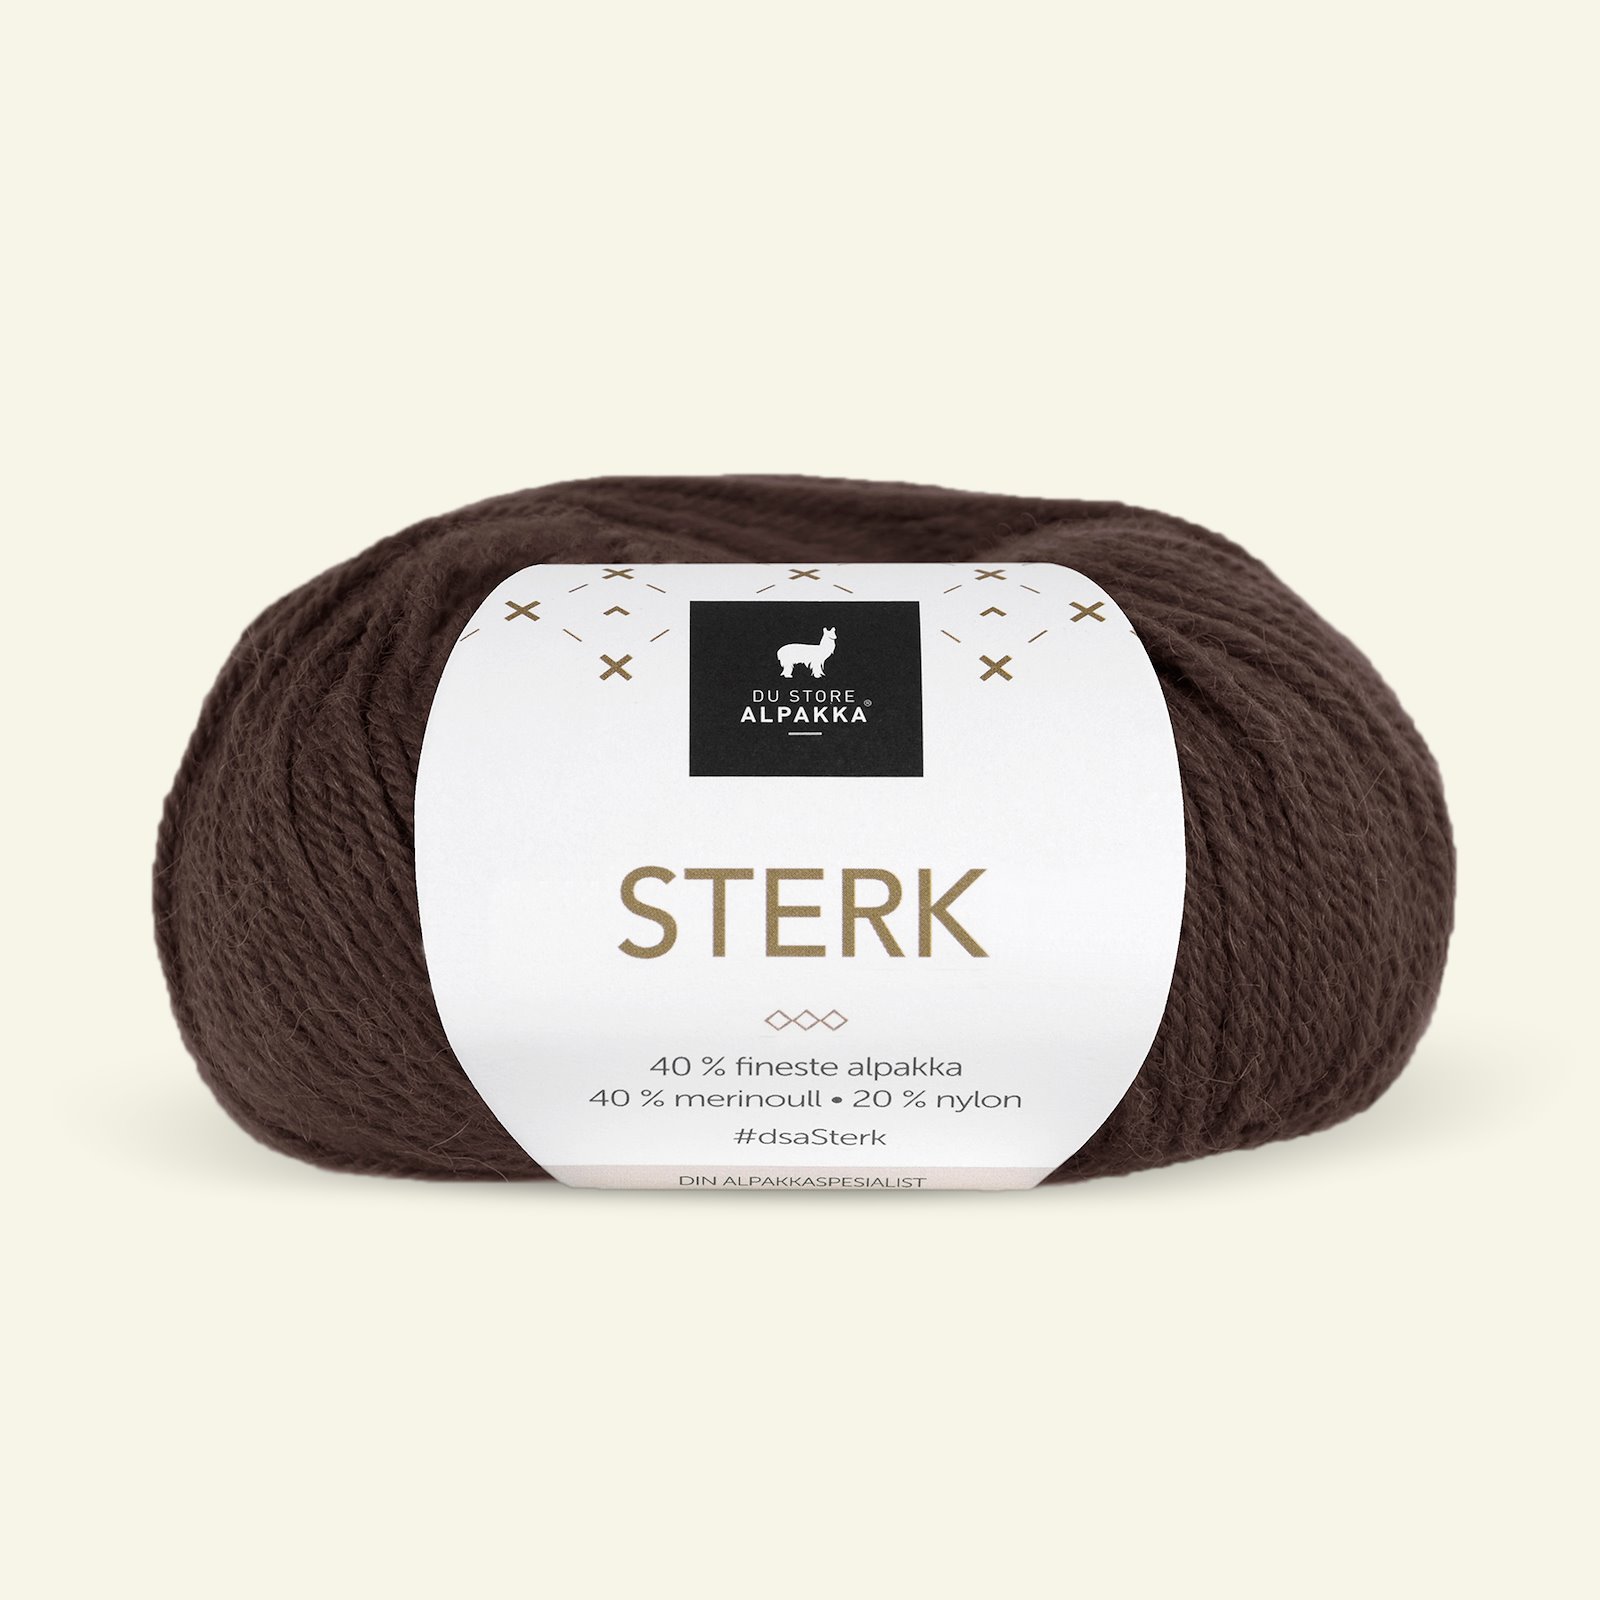 Du Store Alpakka, alpaca merino mixed yarn "Sterk", dark brown (810) 90000659_pack